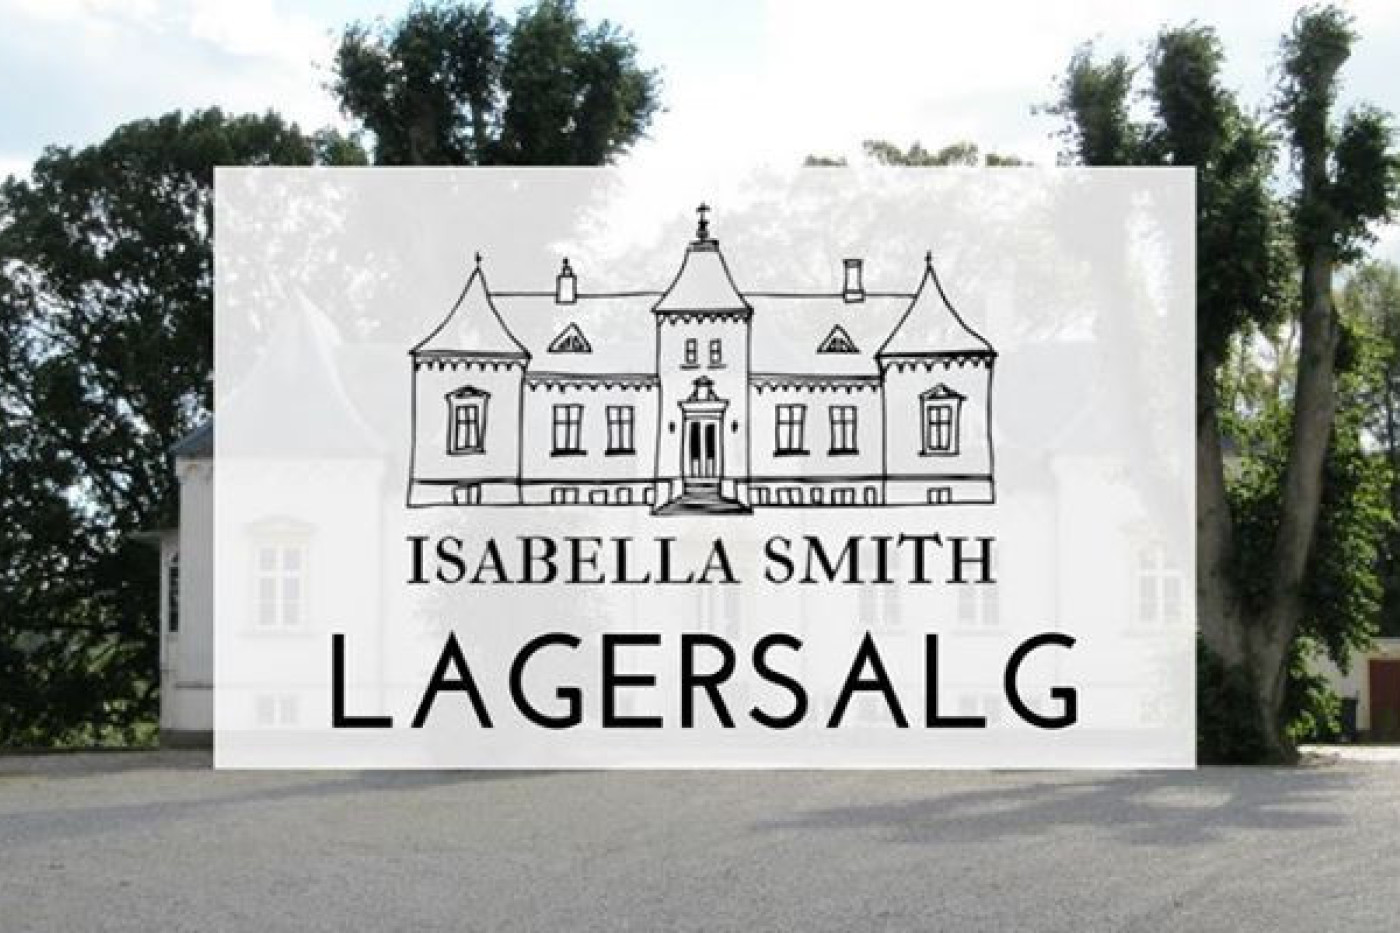 Isabella Smith lagersalg